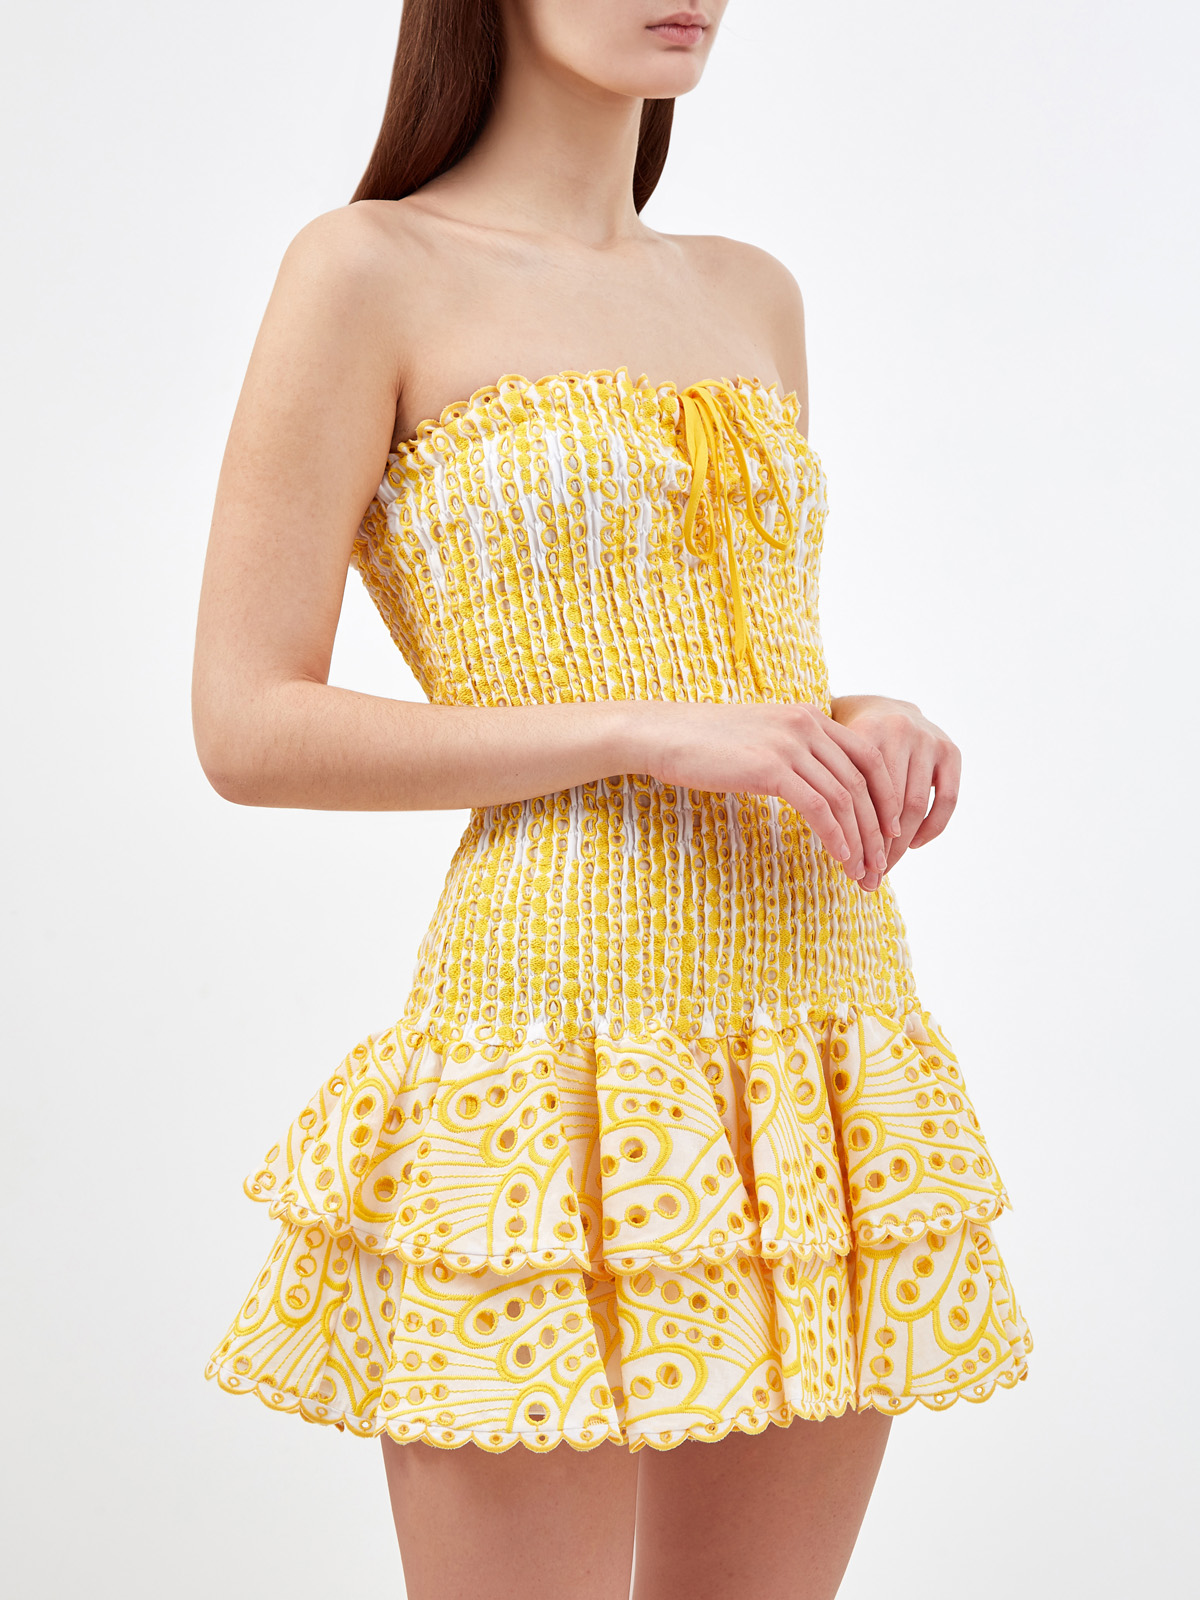 Мини-платье Megan из вышитого хлопка broderie anglaise CHARO RUIZ IBIZA, цвет желтый, размер M;L;S - фото 3